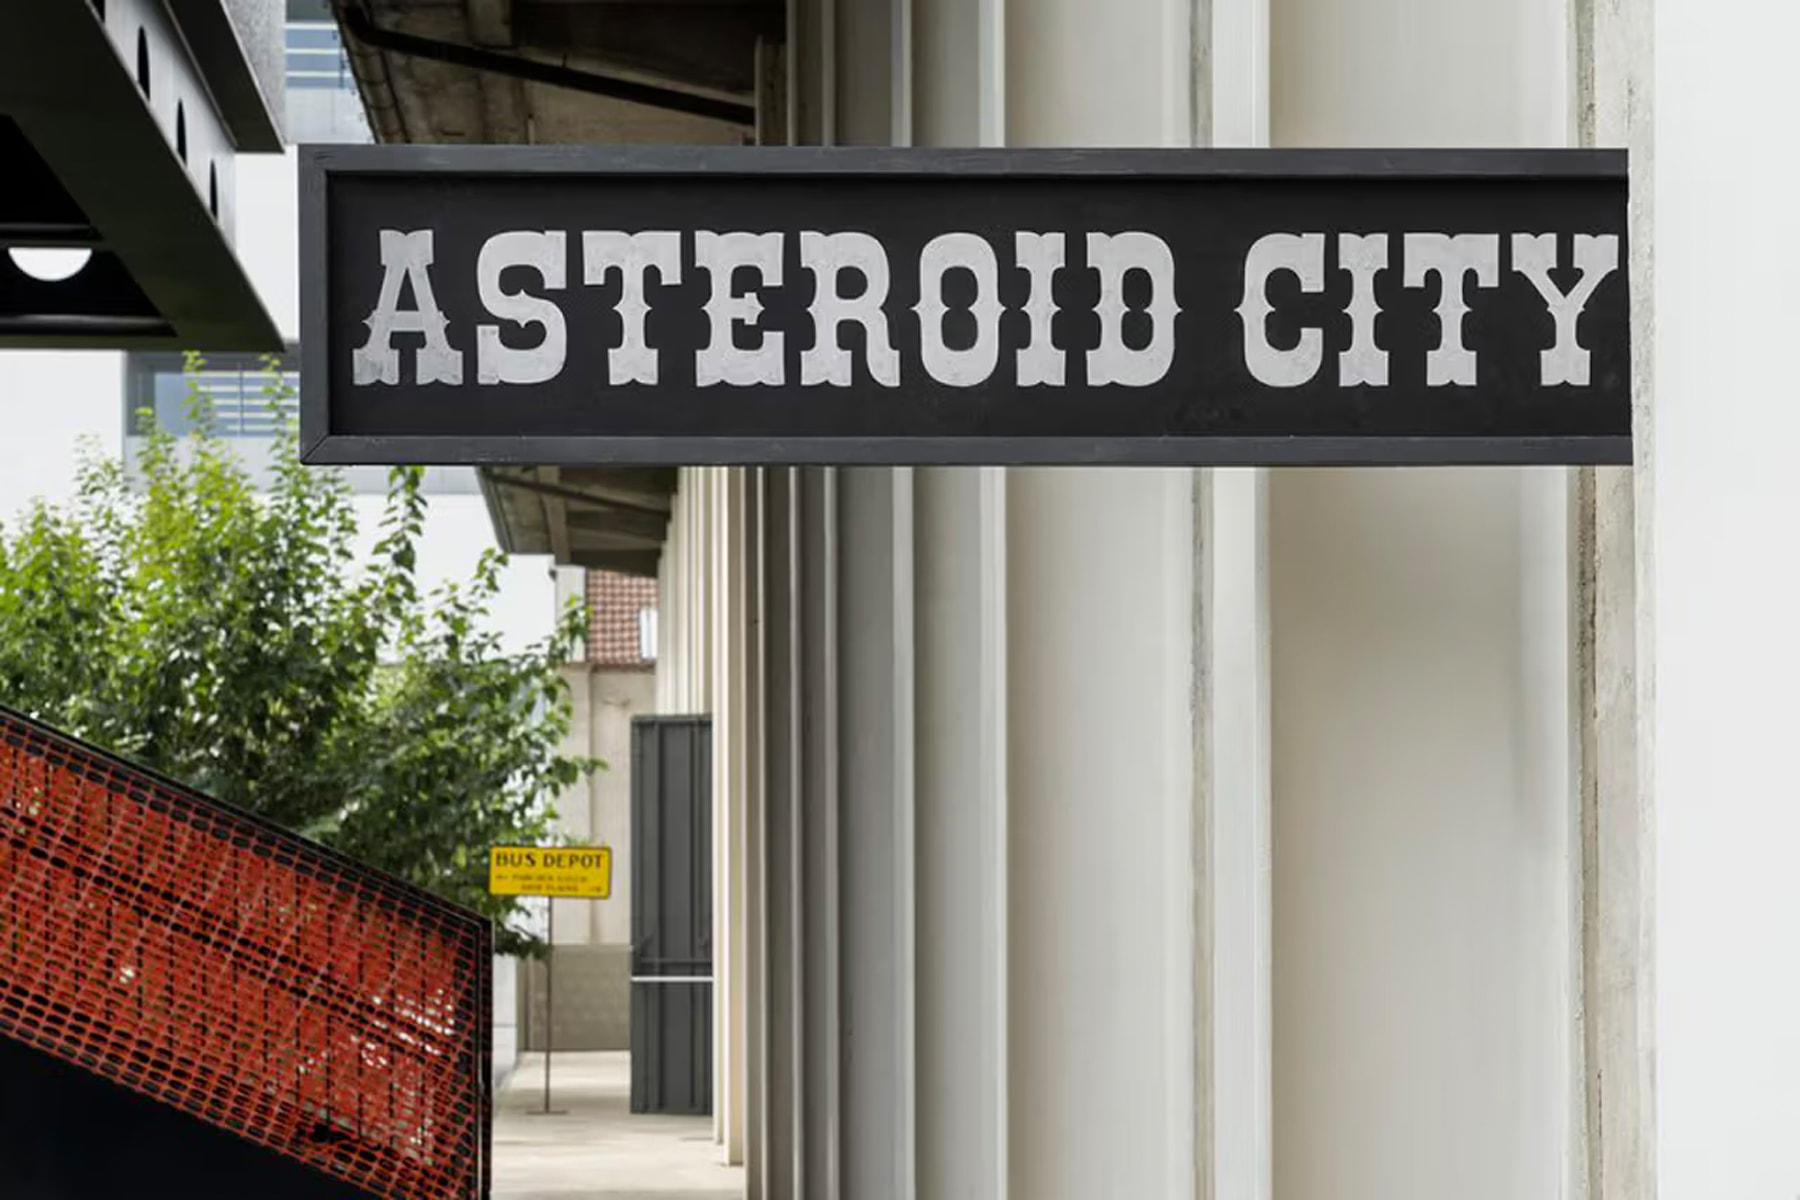 走進 Wes Anderson 電影《小行星城 Asteroid City》主題沈浸式展覽